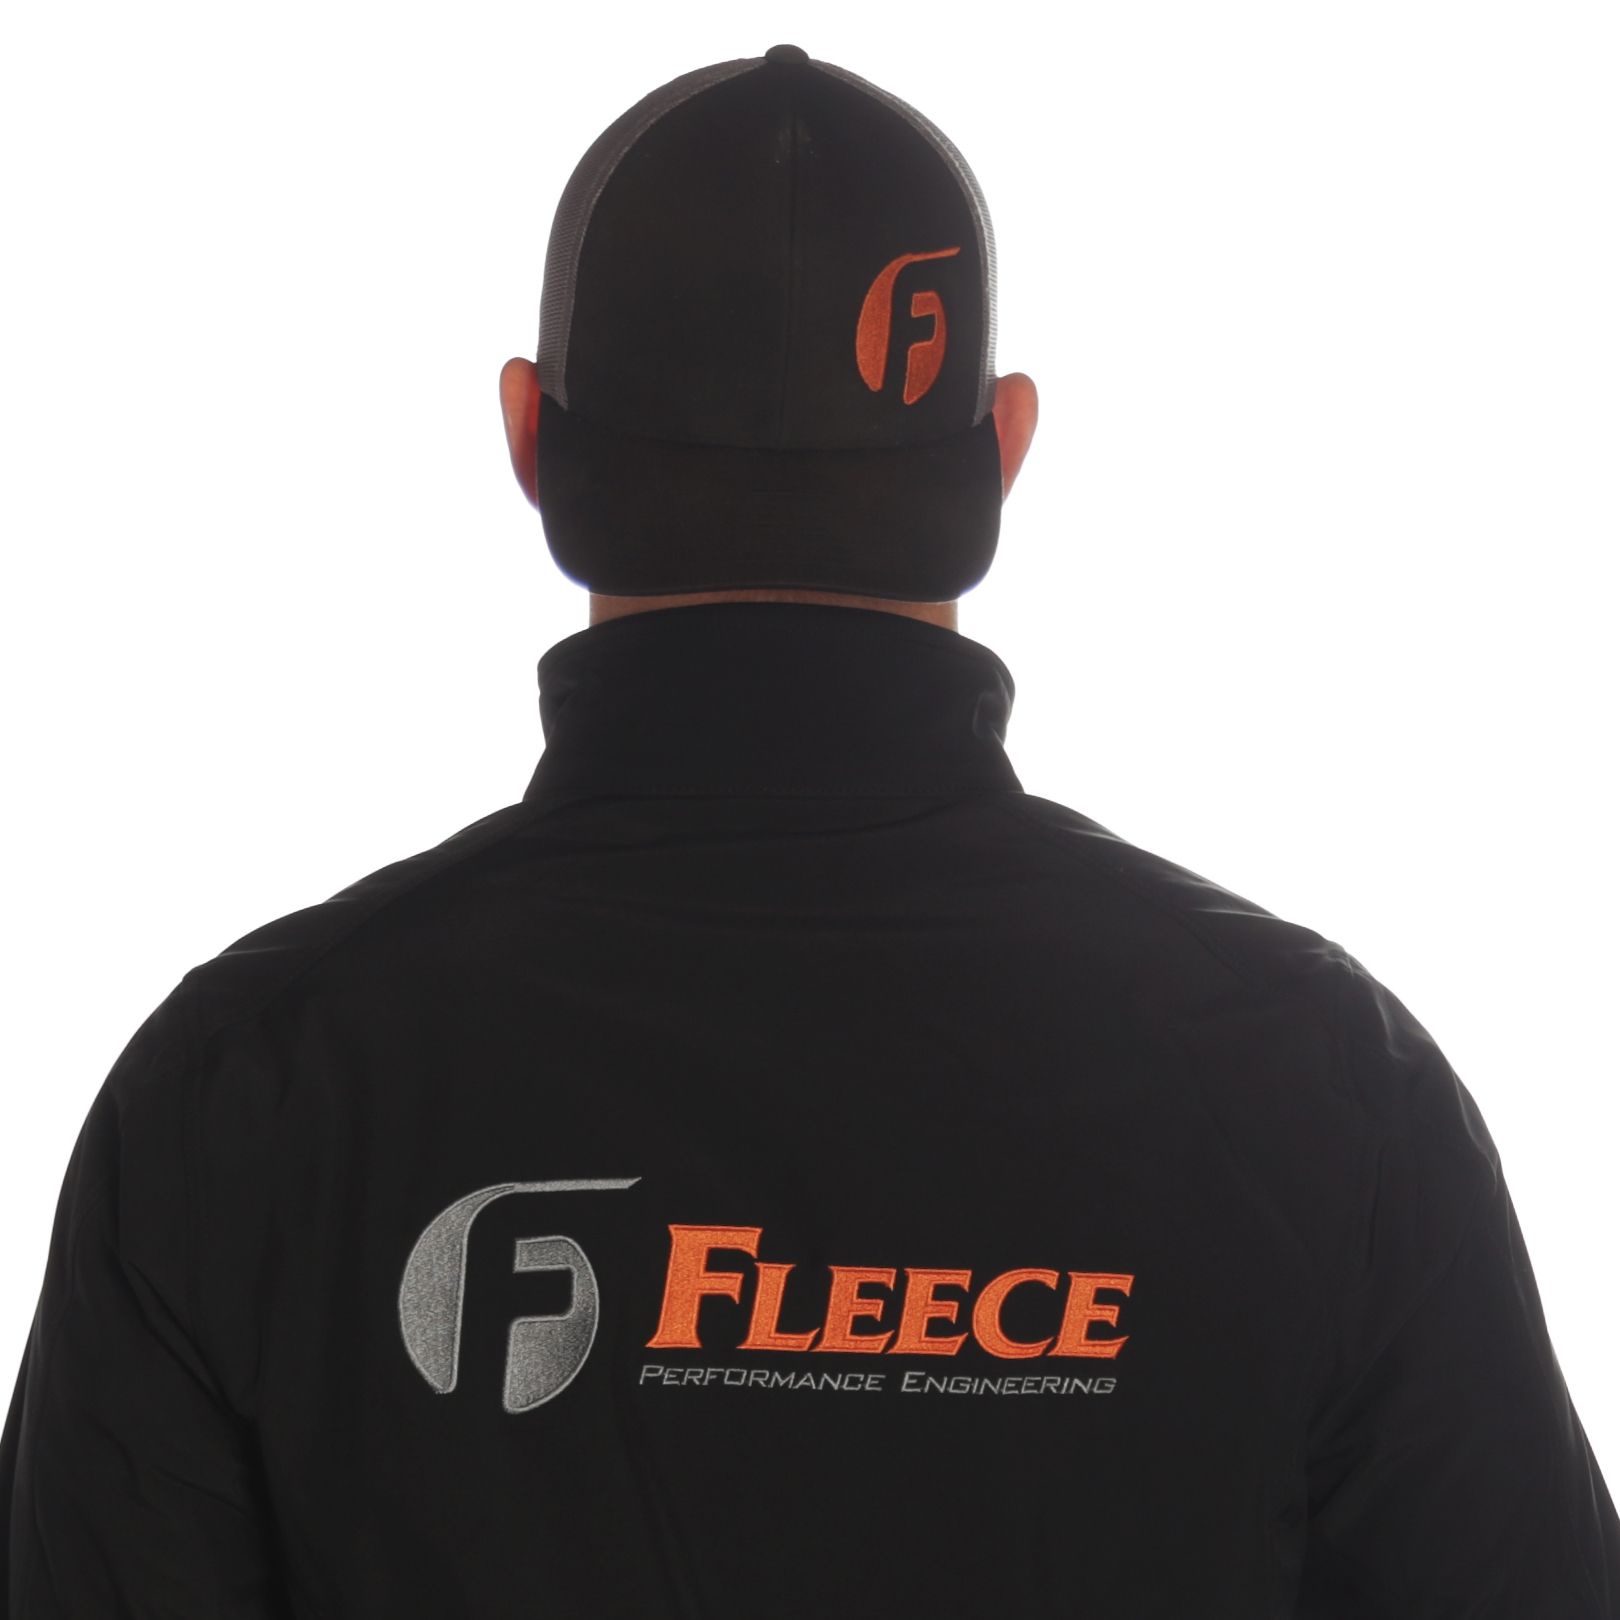 Fleece Performance Embroidered Jacket Fleece Performance Engineering, Inc.:  Innovating Diesel Performance